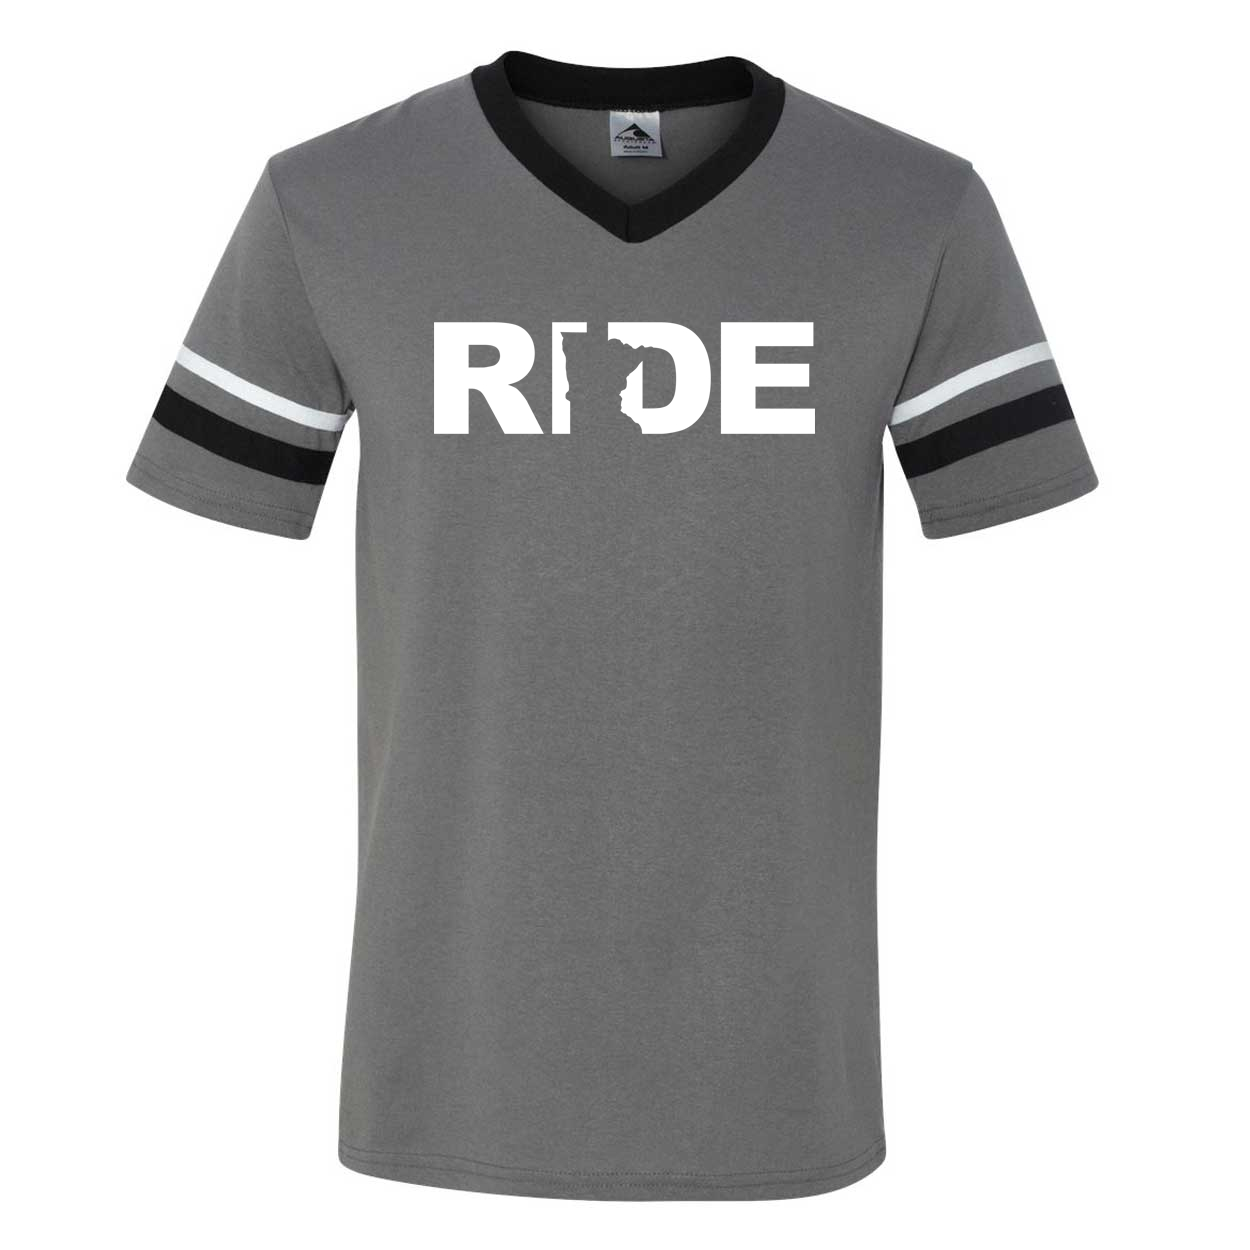 Ride Minnesota Classic Premium Striped Jersey T-Shirt Graphite/Black/White (White Logo)